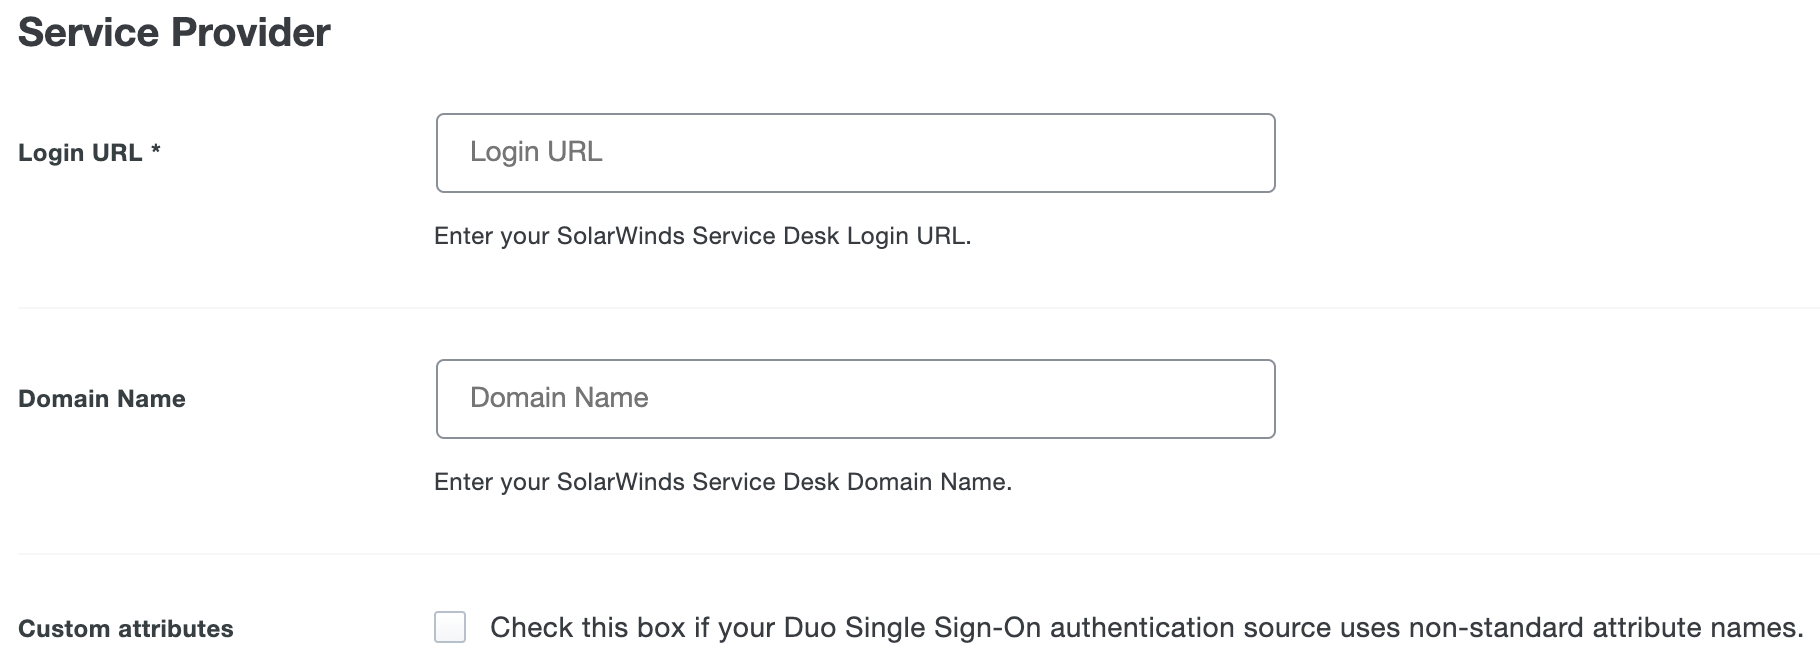 Duo SolarWinds Service Desk Custom Attributes Checkbox